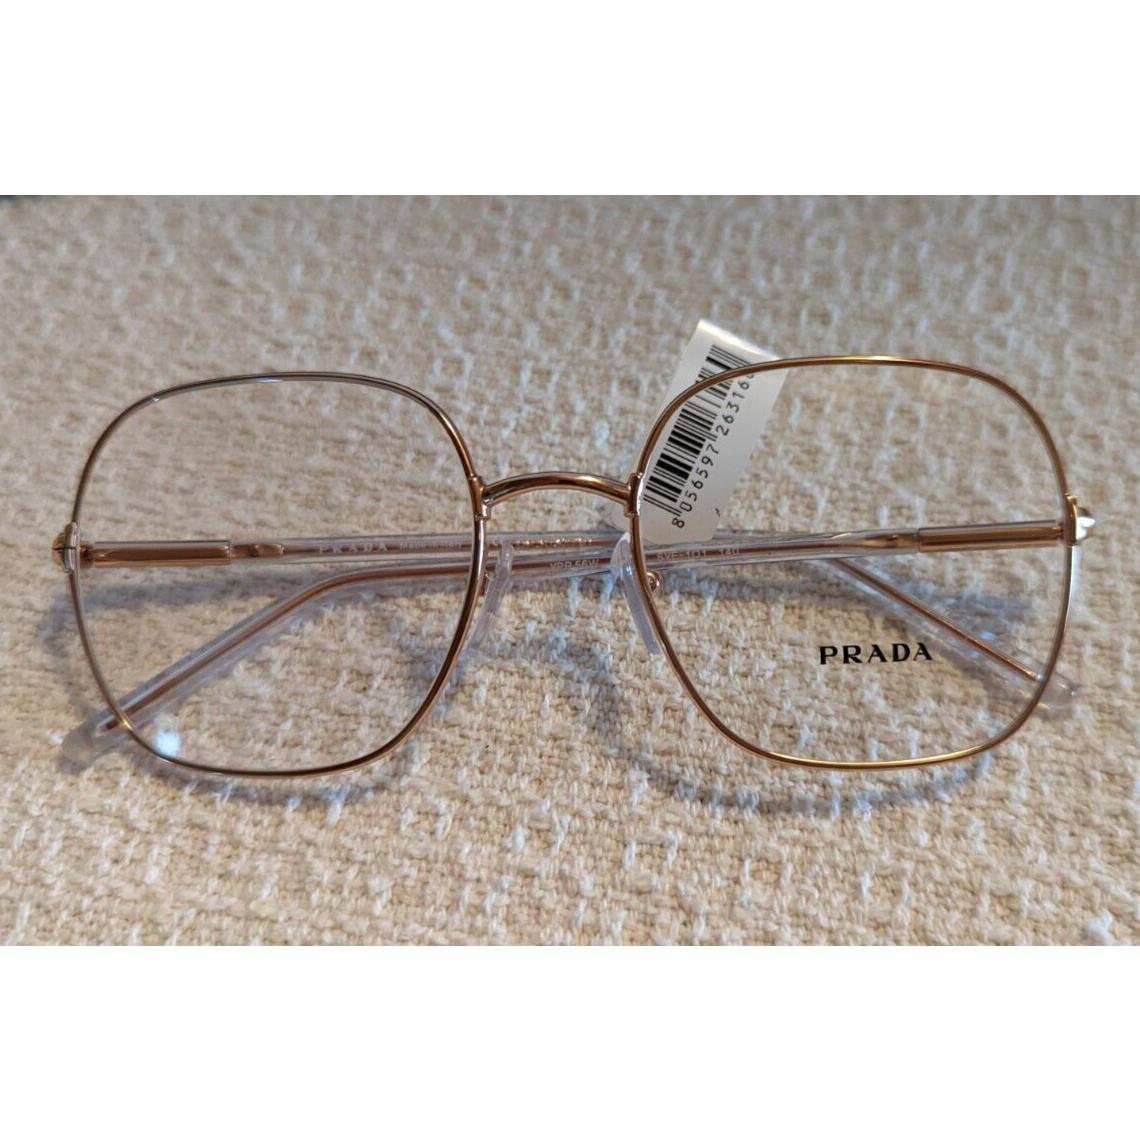 Prada eyeglasses SVF - Clear Frame 0